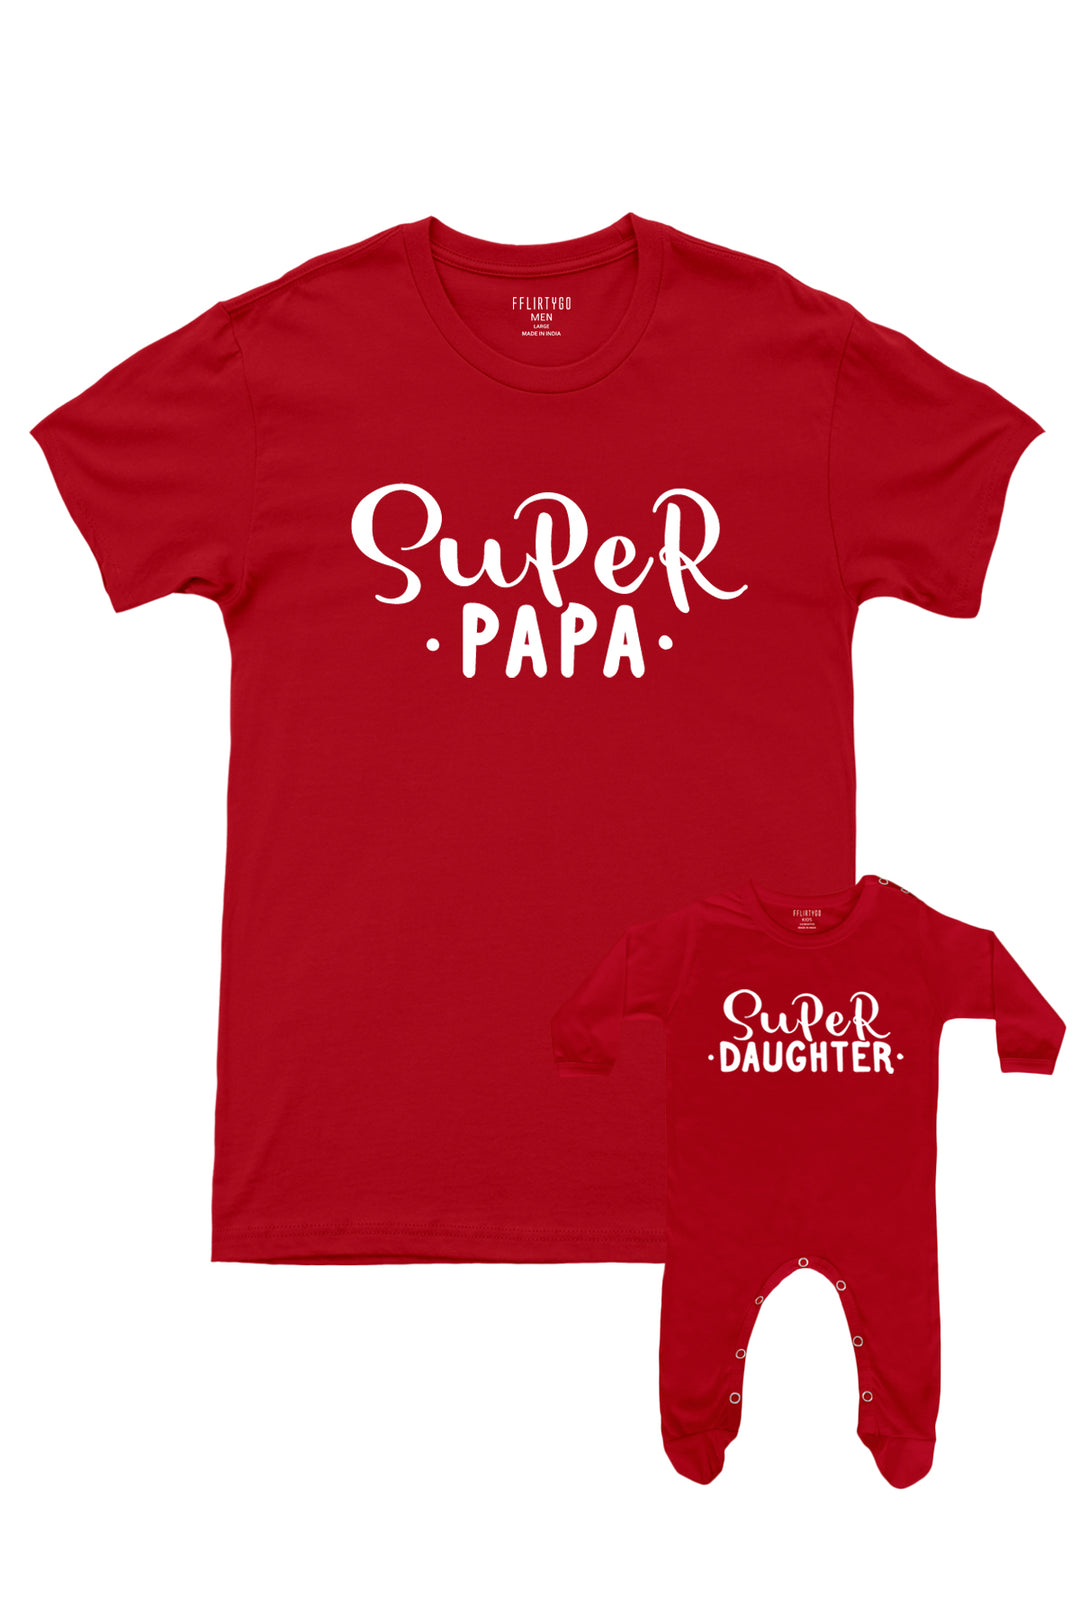 Super Papa - Super Daughter